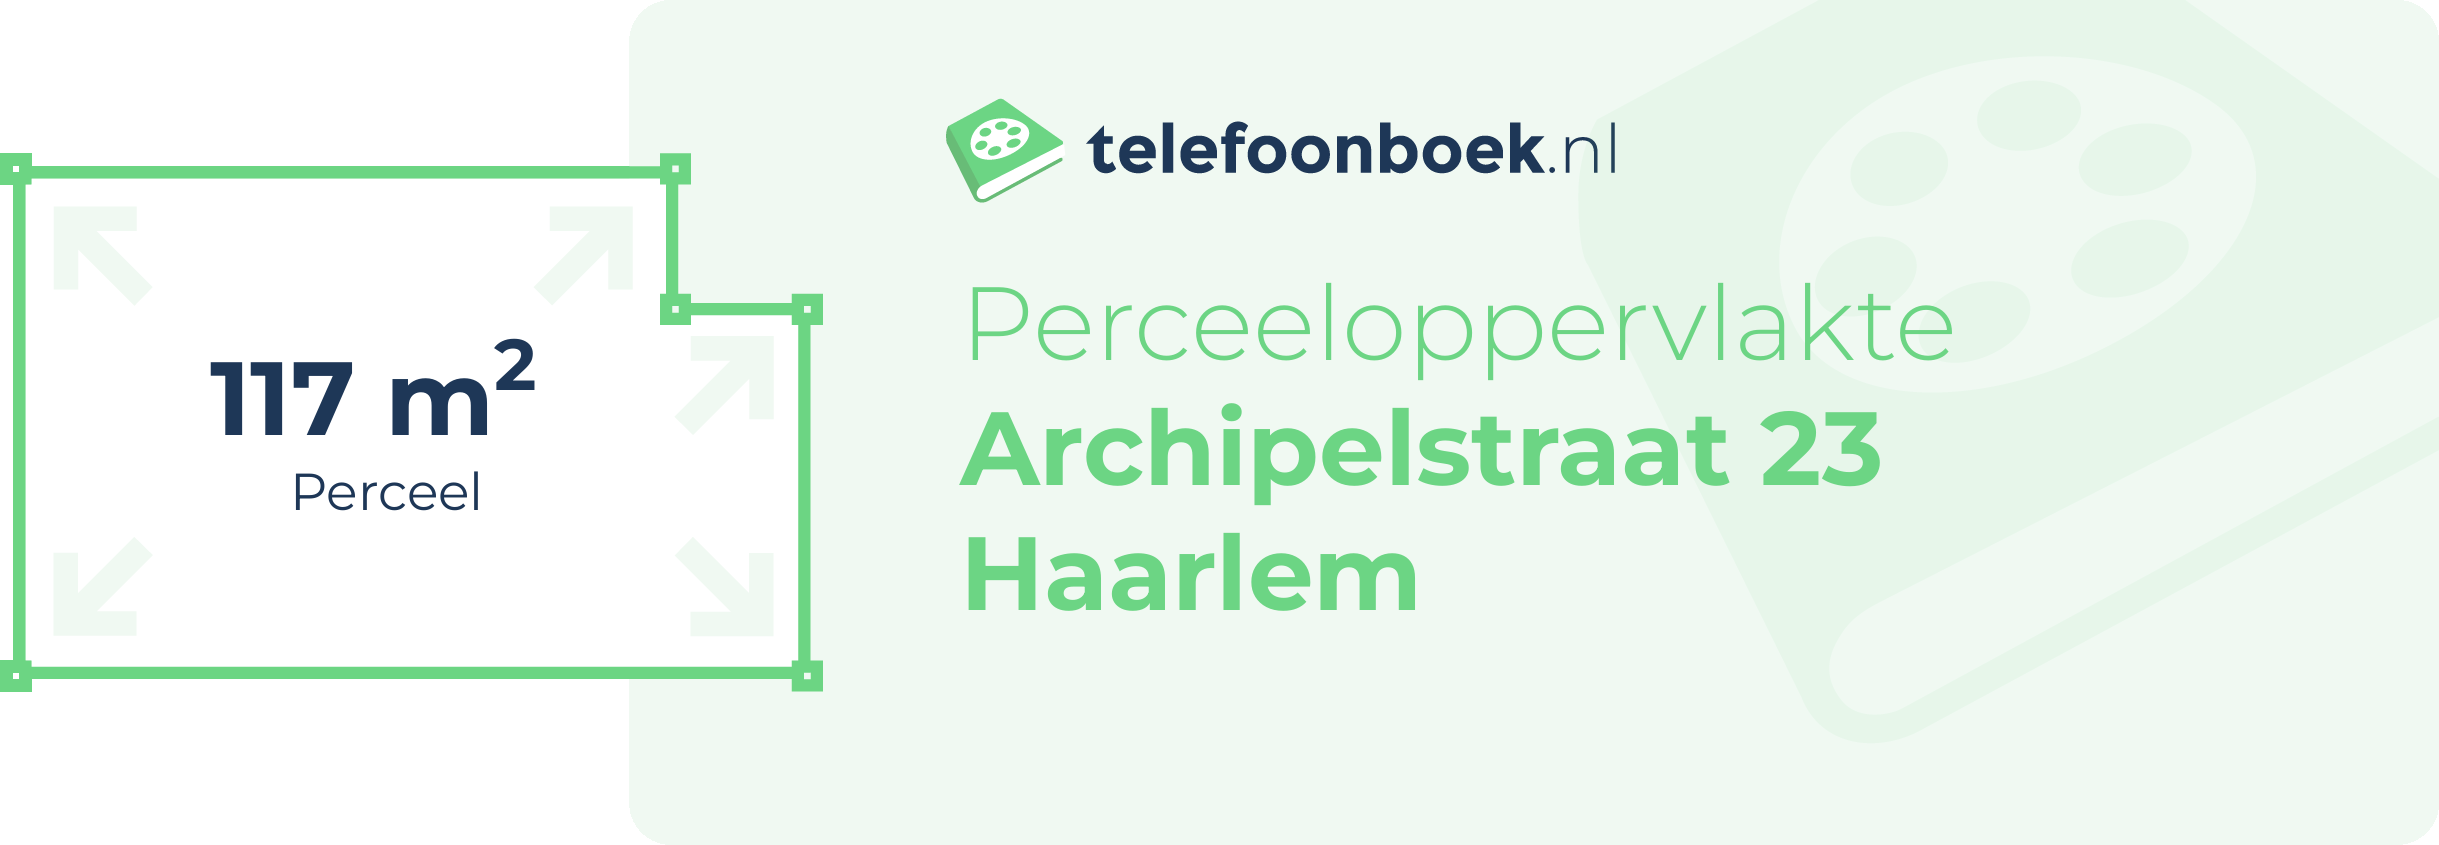 Perceeloppervlakte Archipelstraat 23 Haarlem